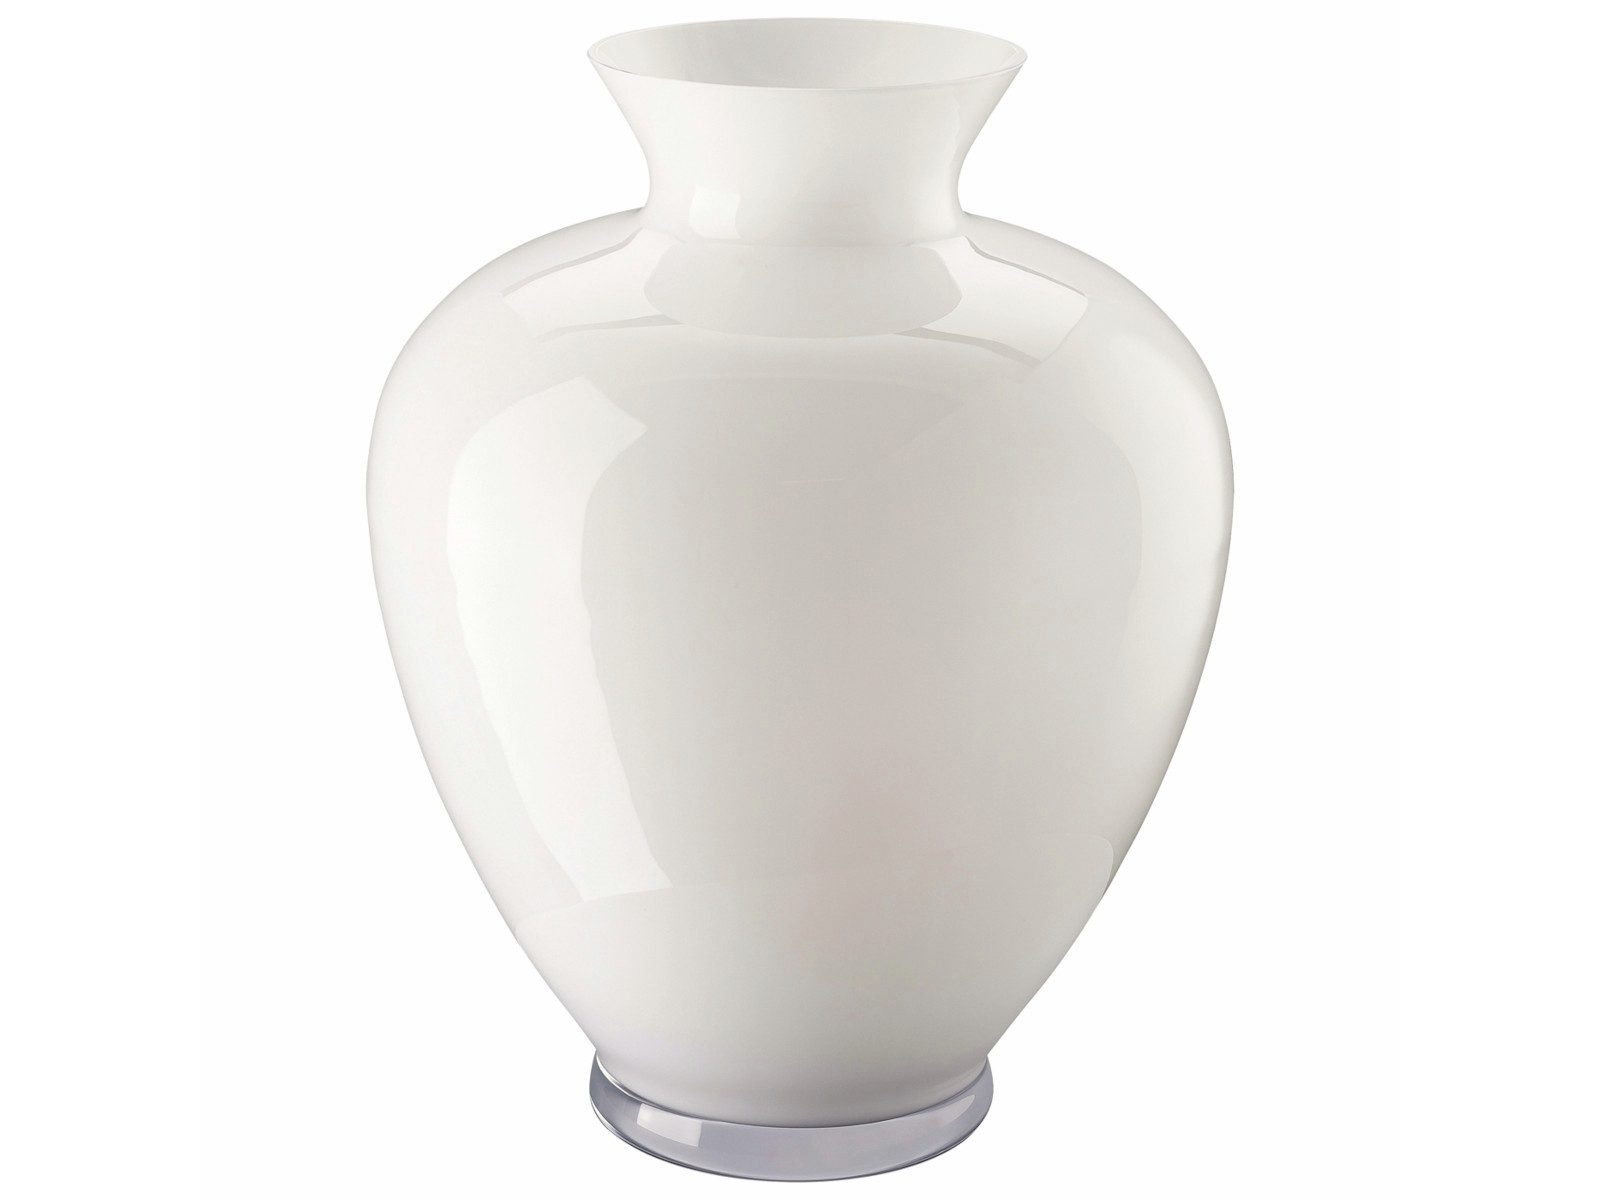 Rosenthal Dekovase Gianna White - Glass Vase 36cm (Vase)